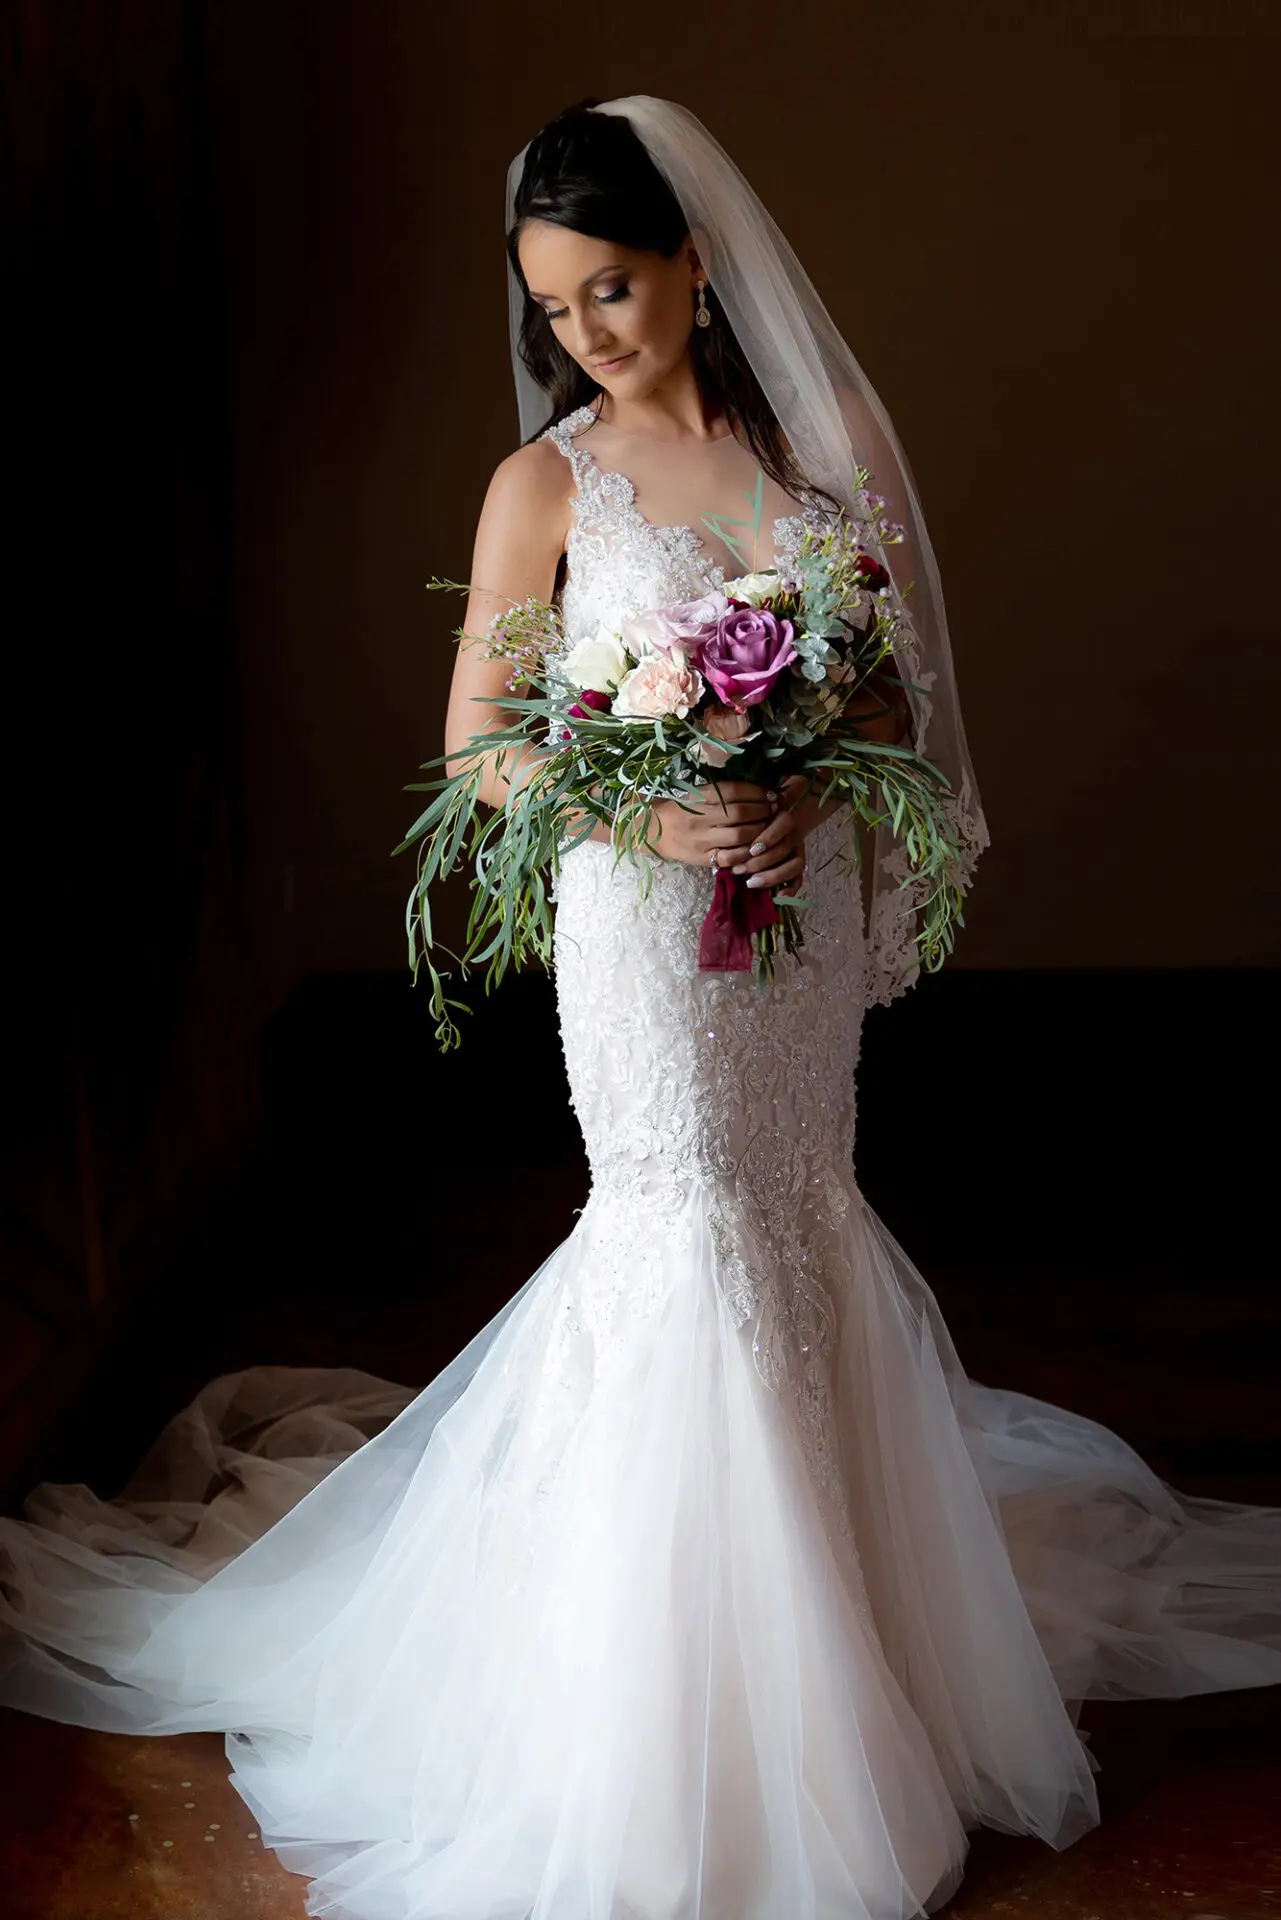 A beautiful bride’s wedding photo